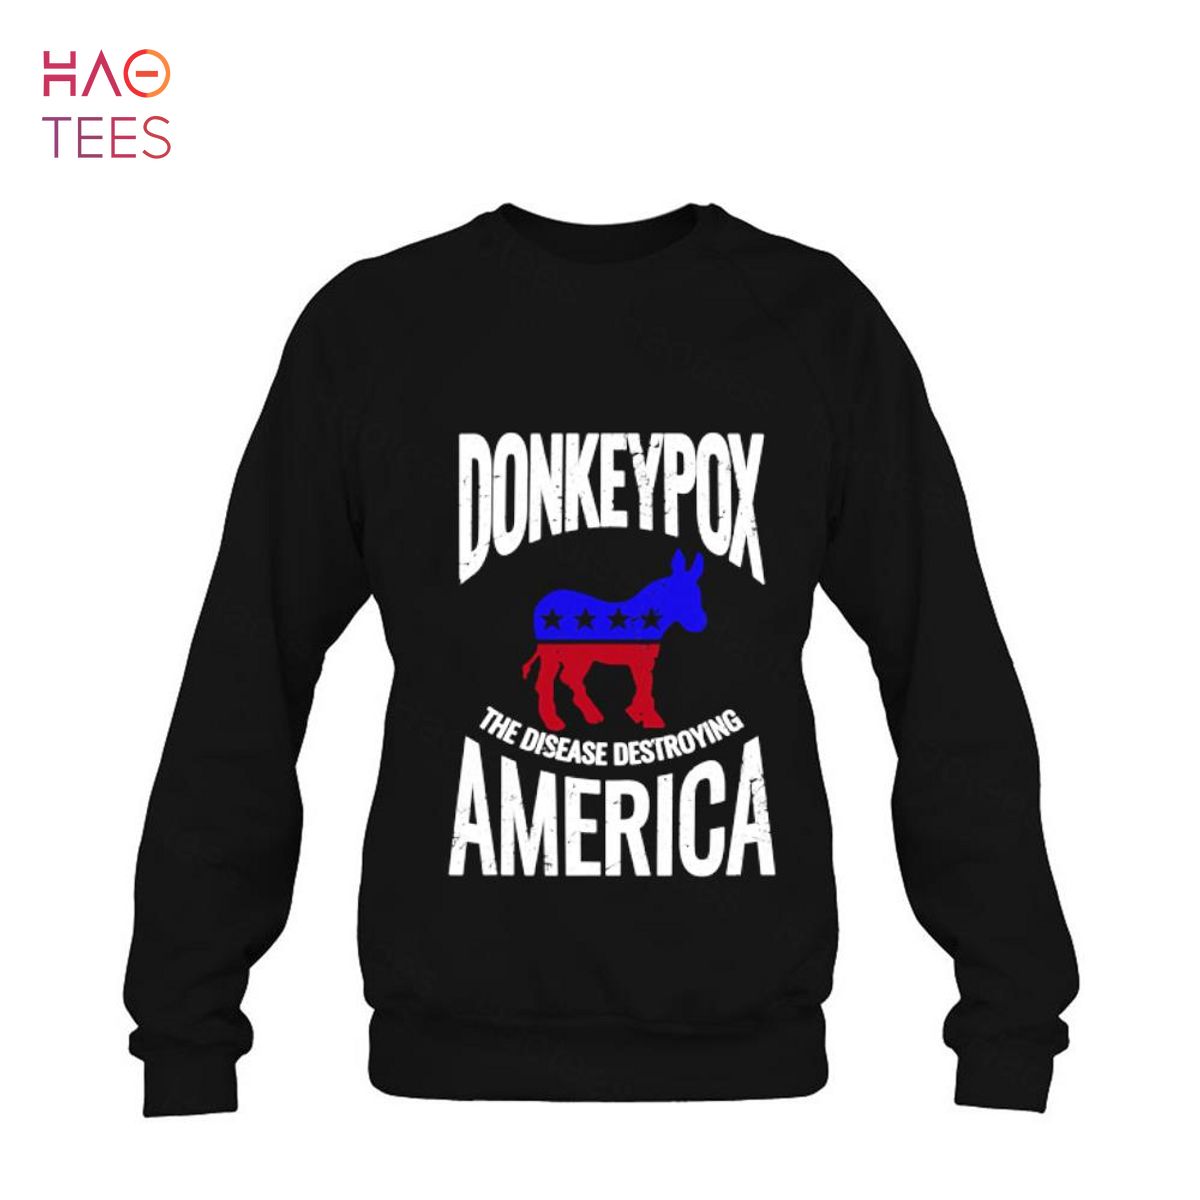 Donkey pox the disease destroying america funny Monkeypox Shirt